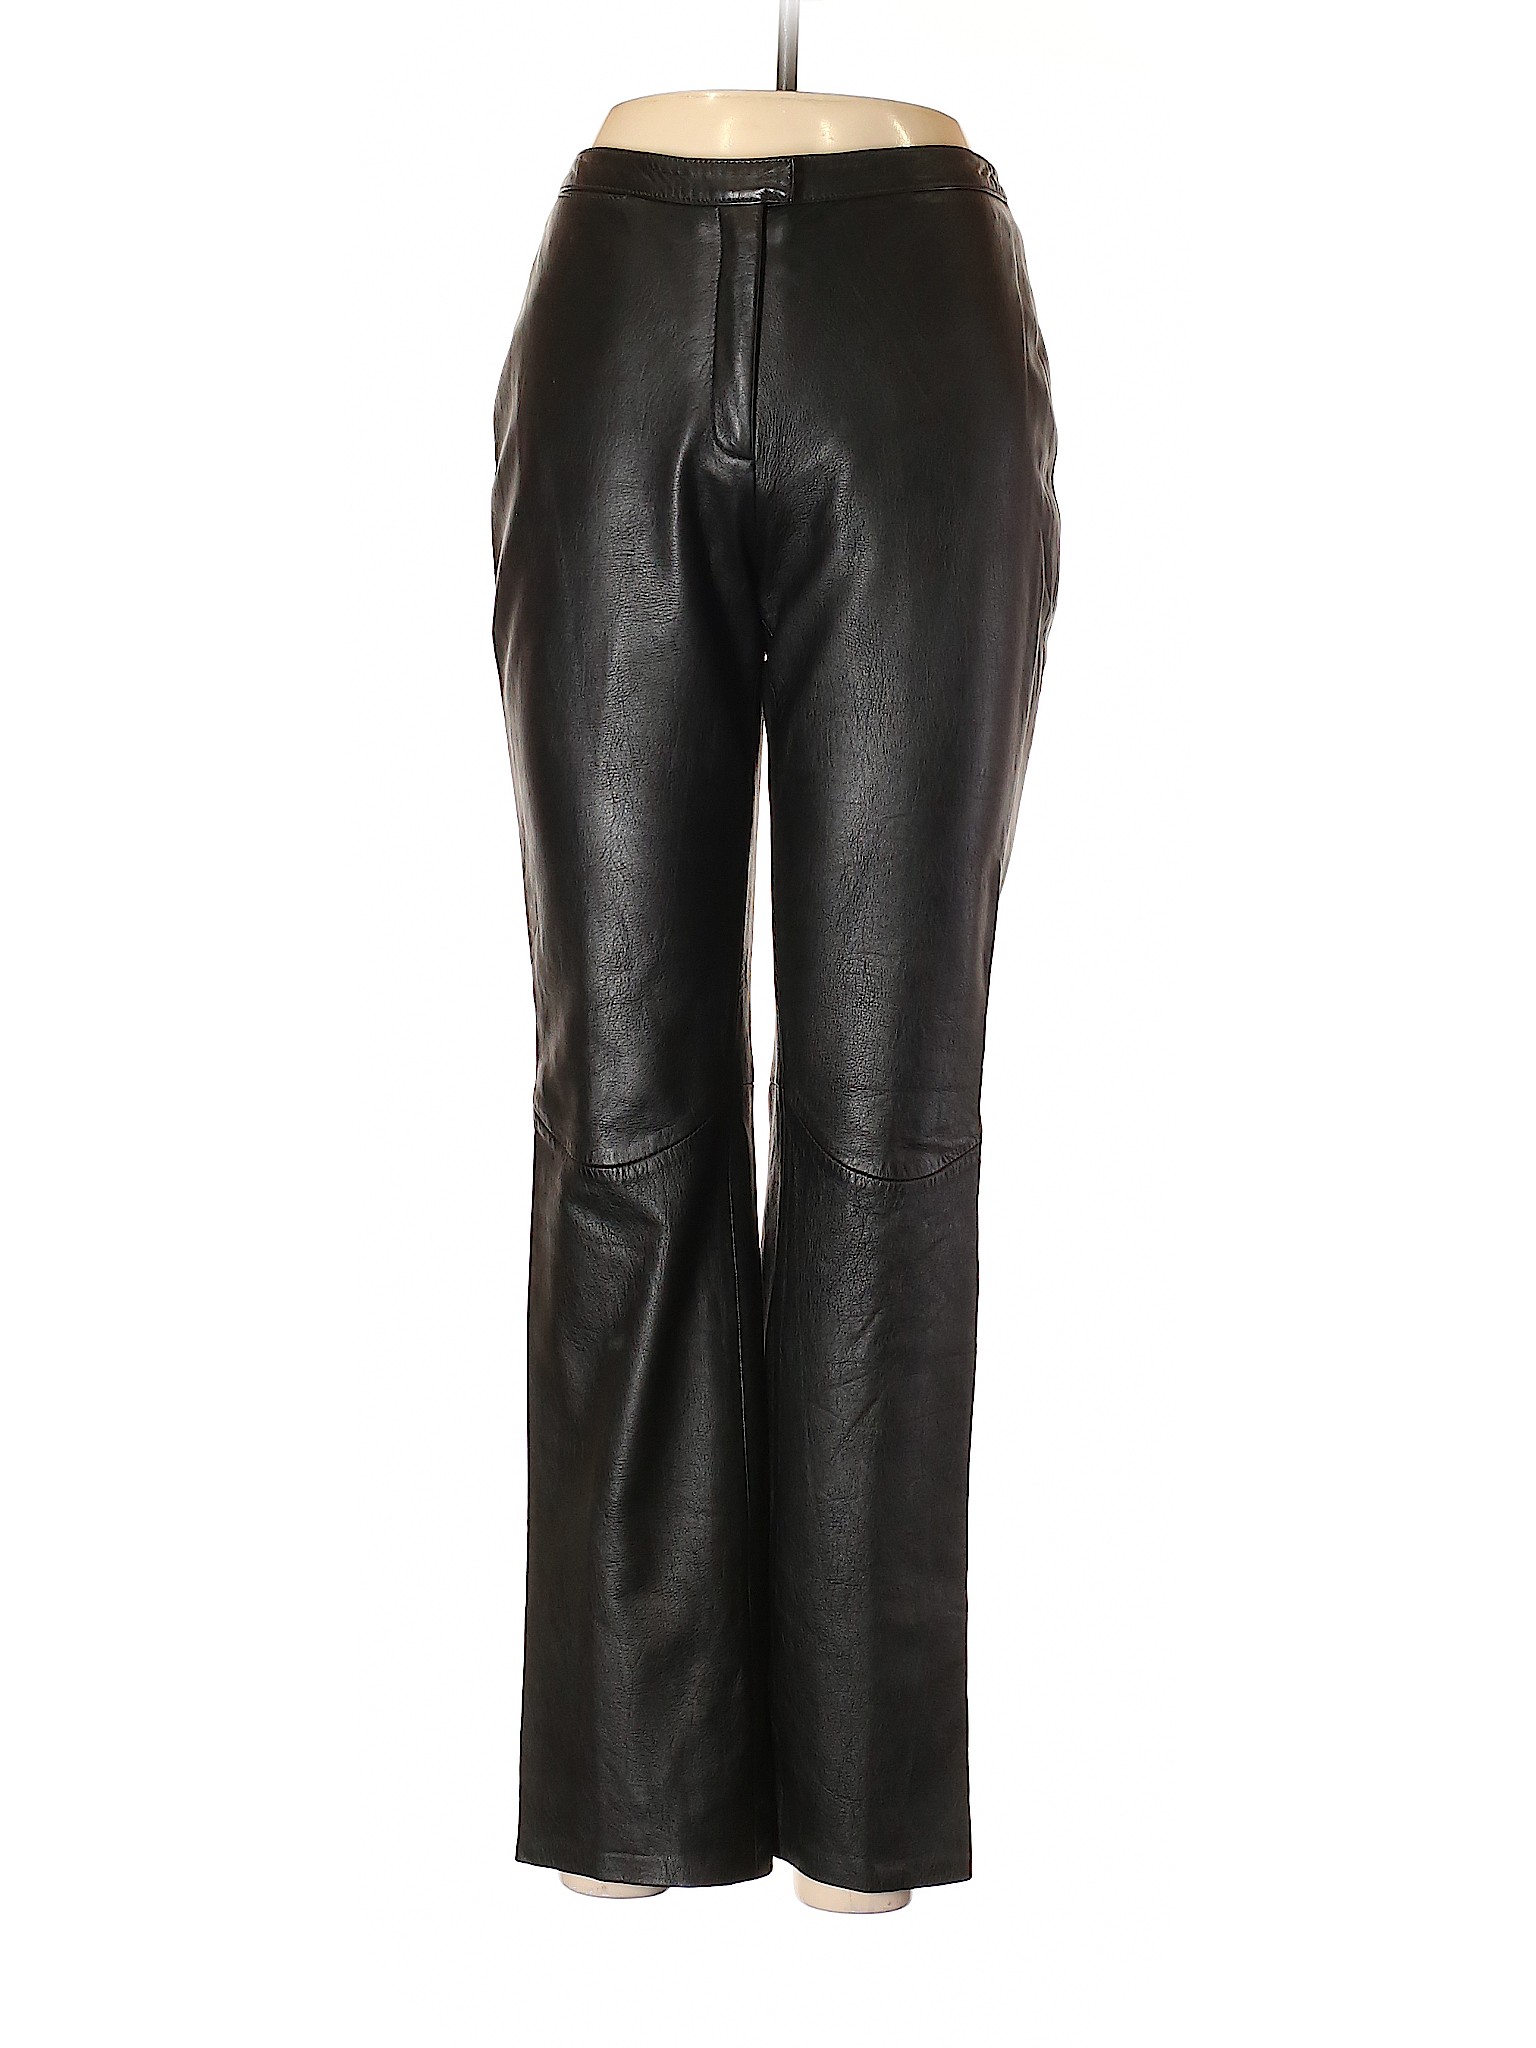 Express Women Black Leather Pants 3 | eBay